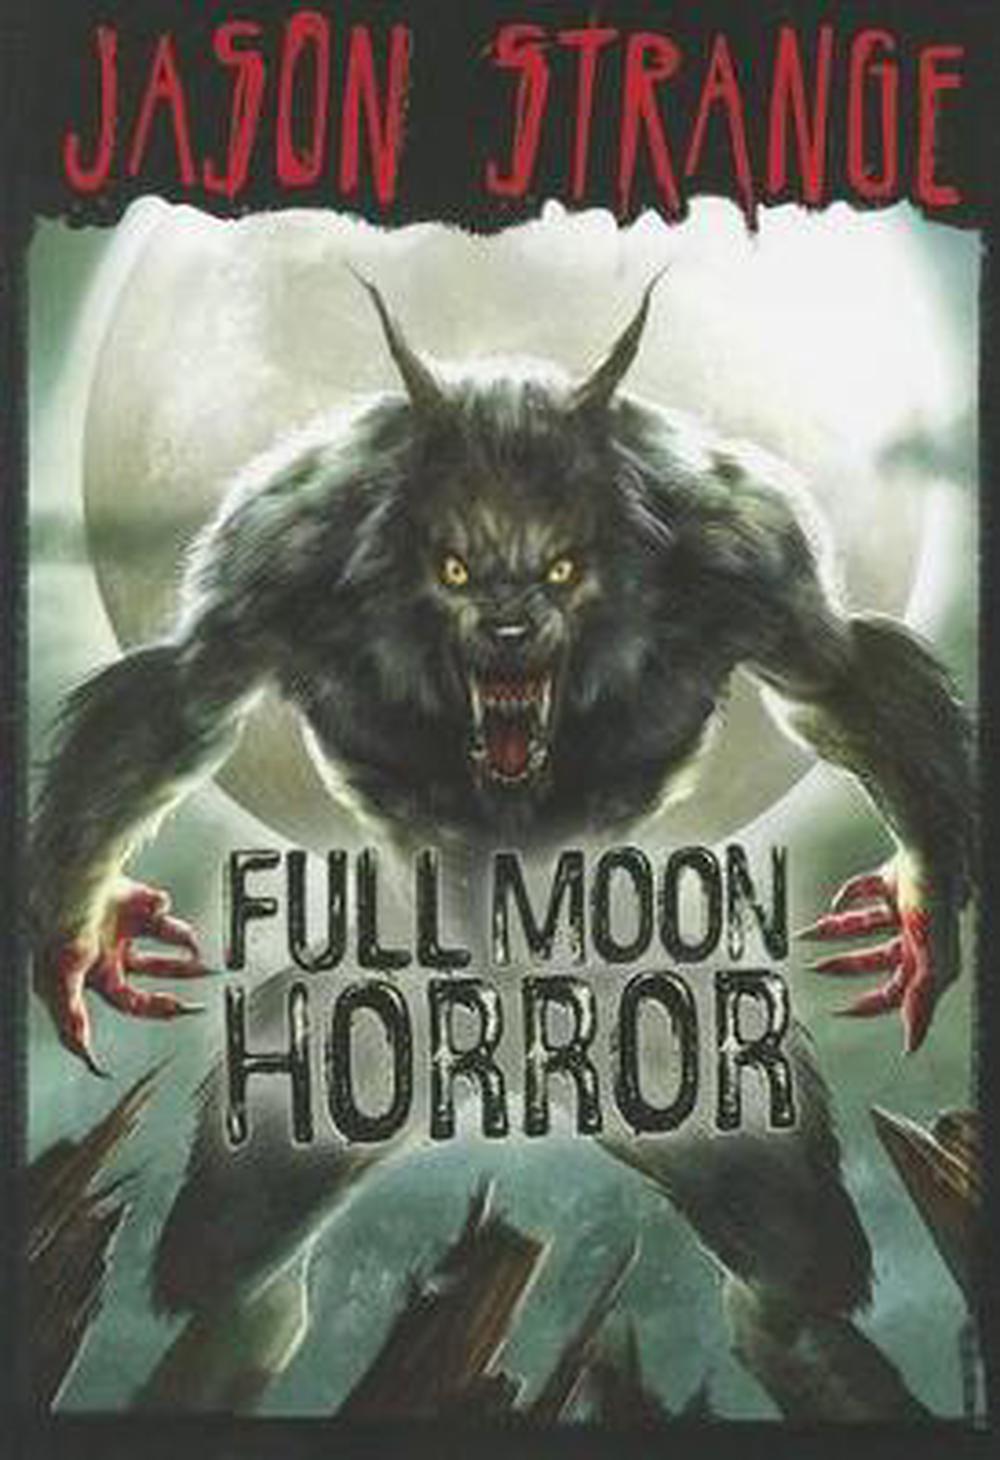 Full Moon Horror (Jason Strange) by Jason Strange (English) Paperback